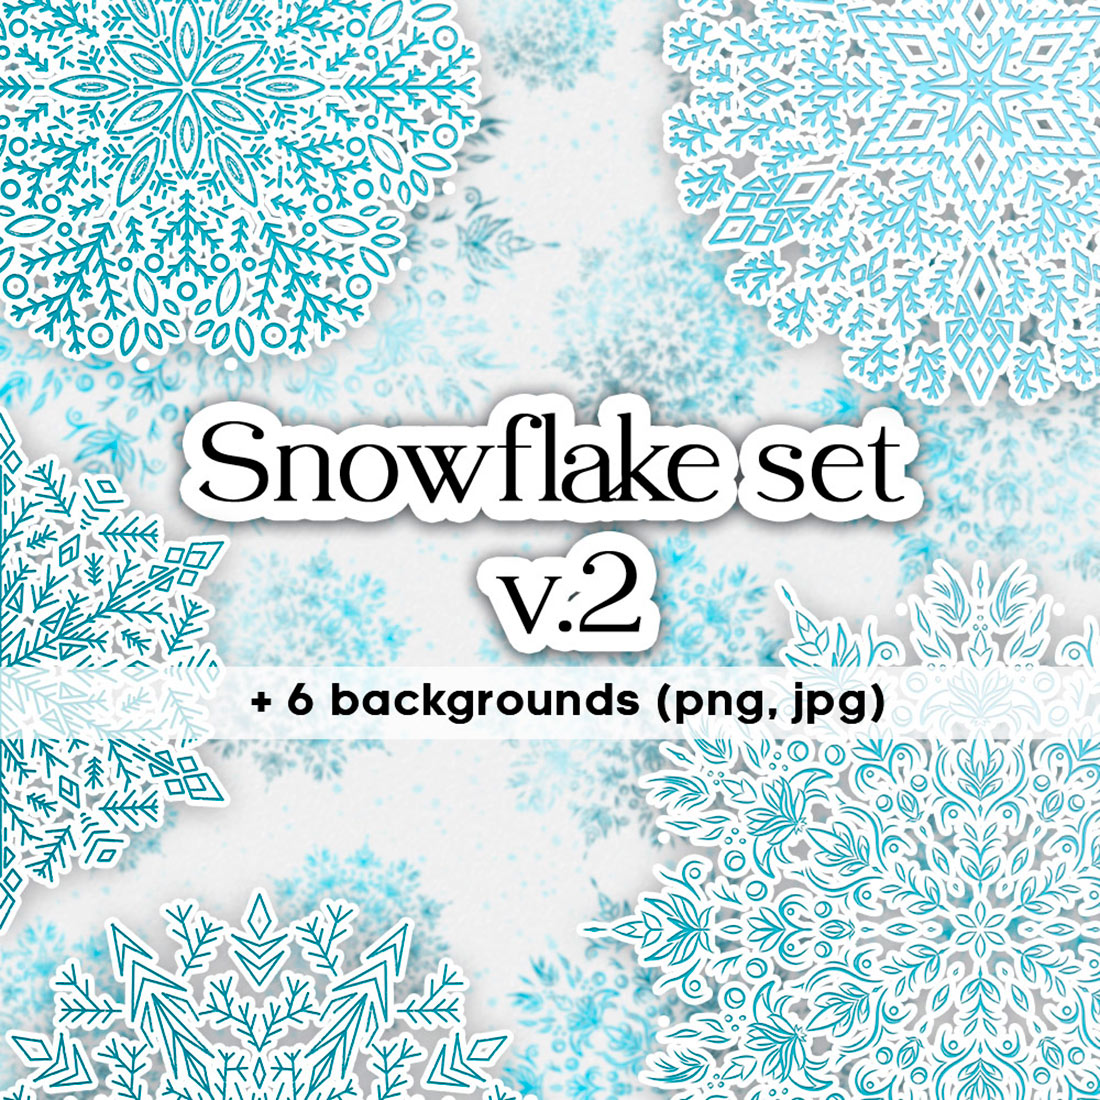 Snowflake Set Design cover image.